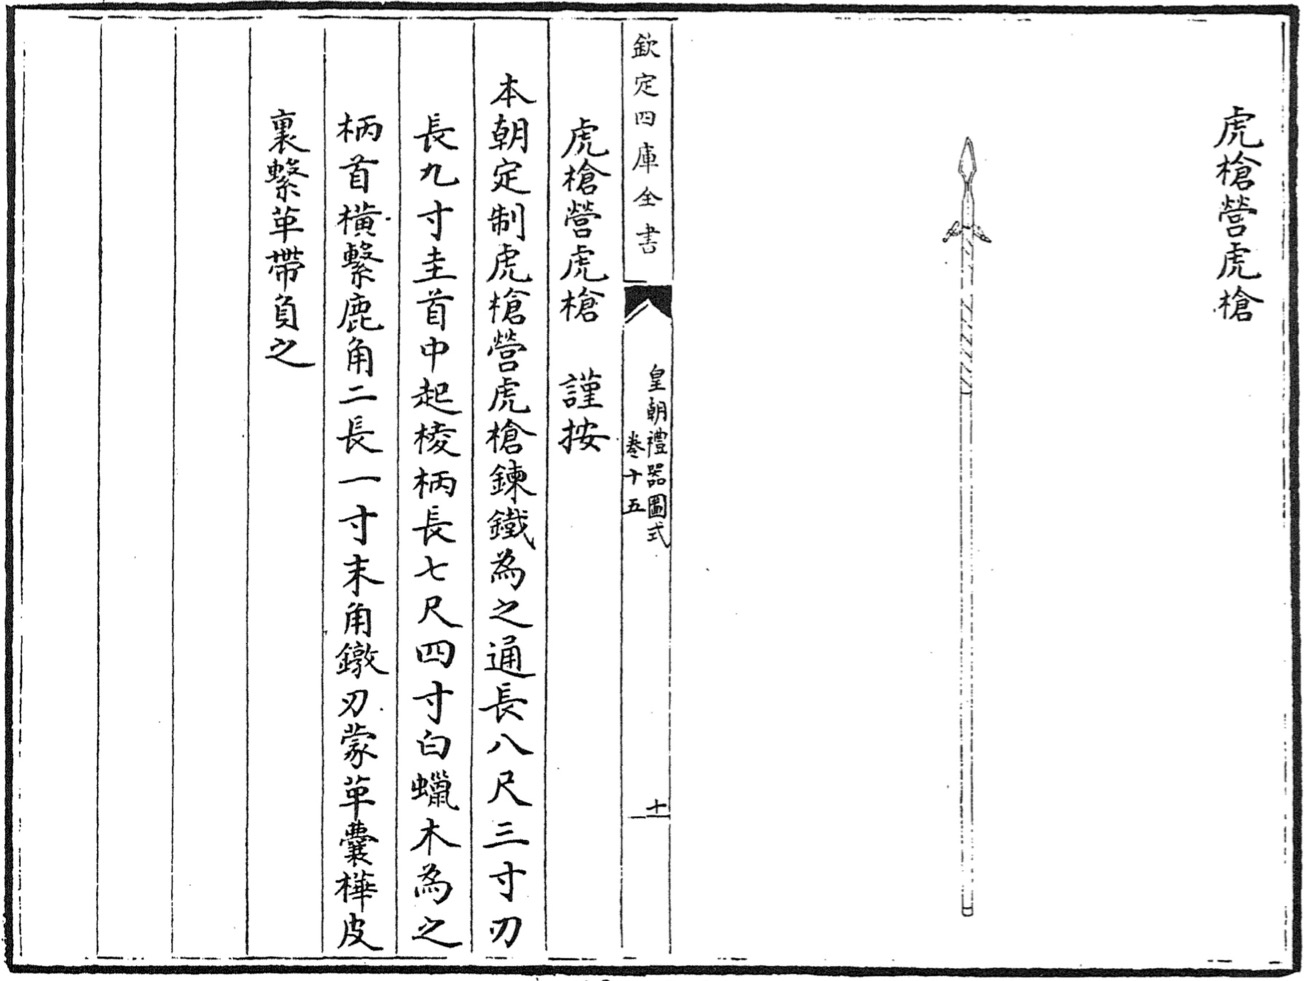 Qing Tiger Spear